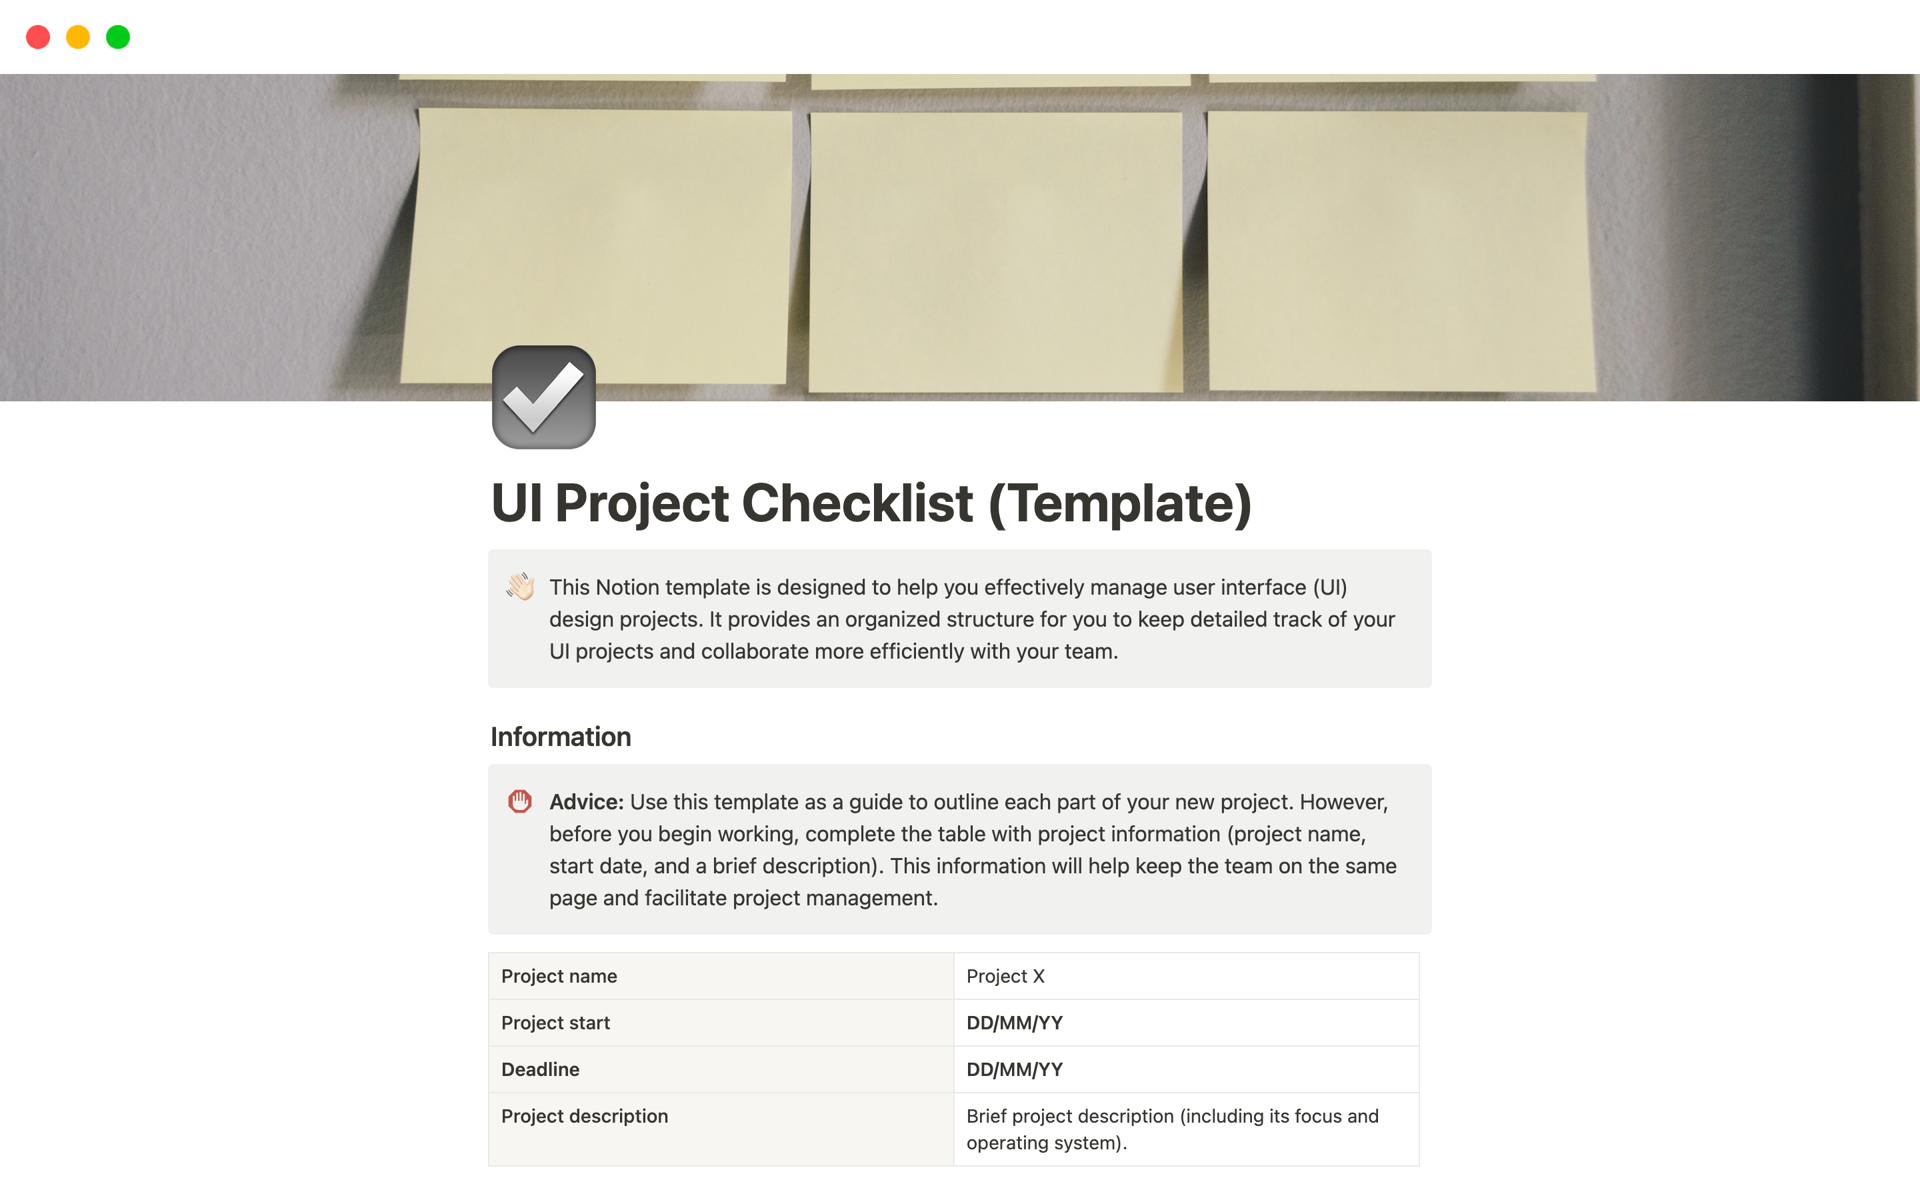 UI Project Checklist님의 템플릿 미리보기